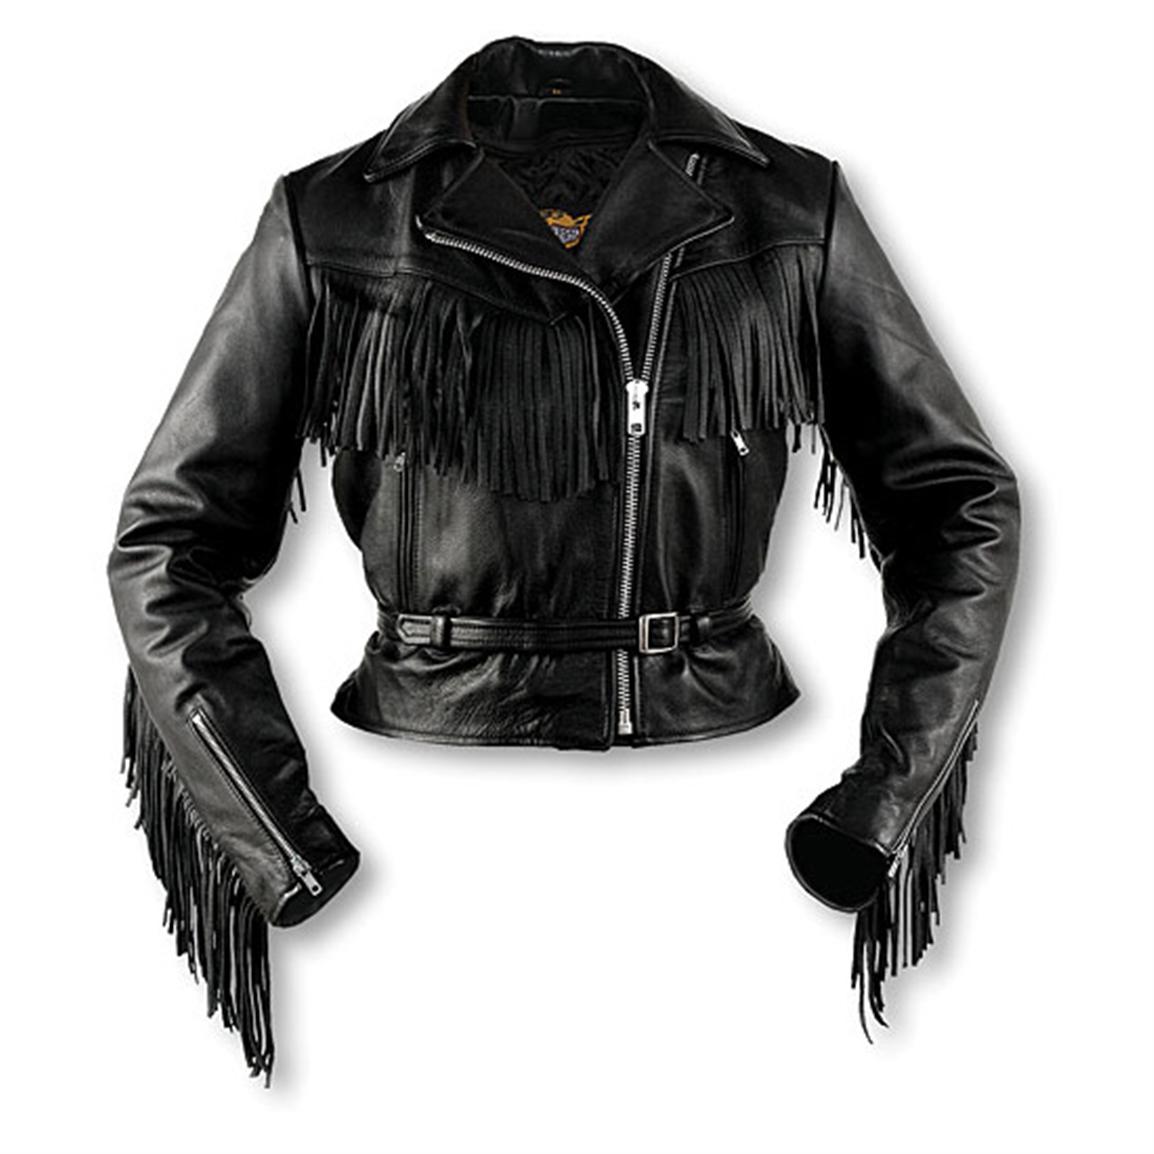 Interstate Leather Jacket Size Chart